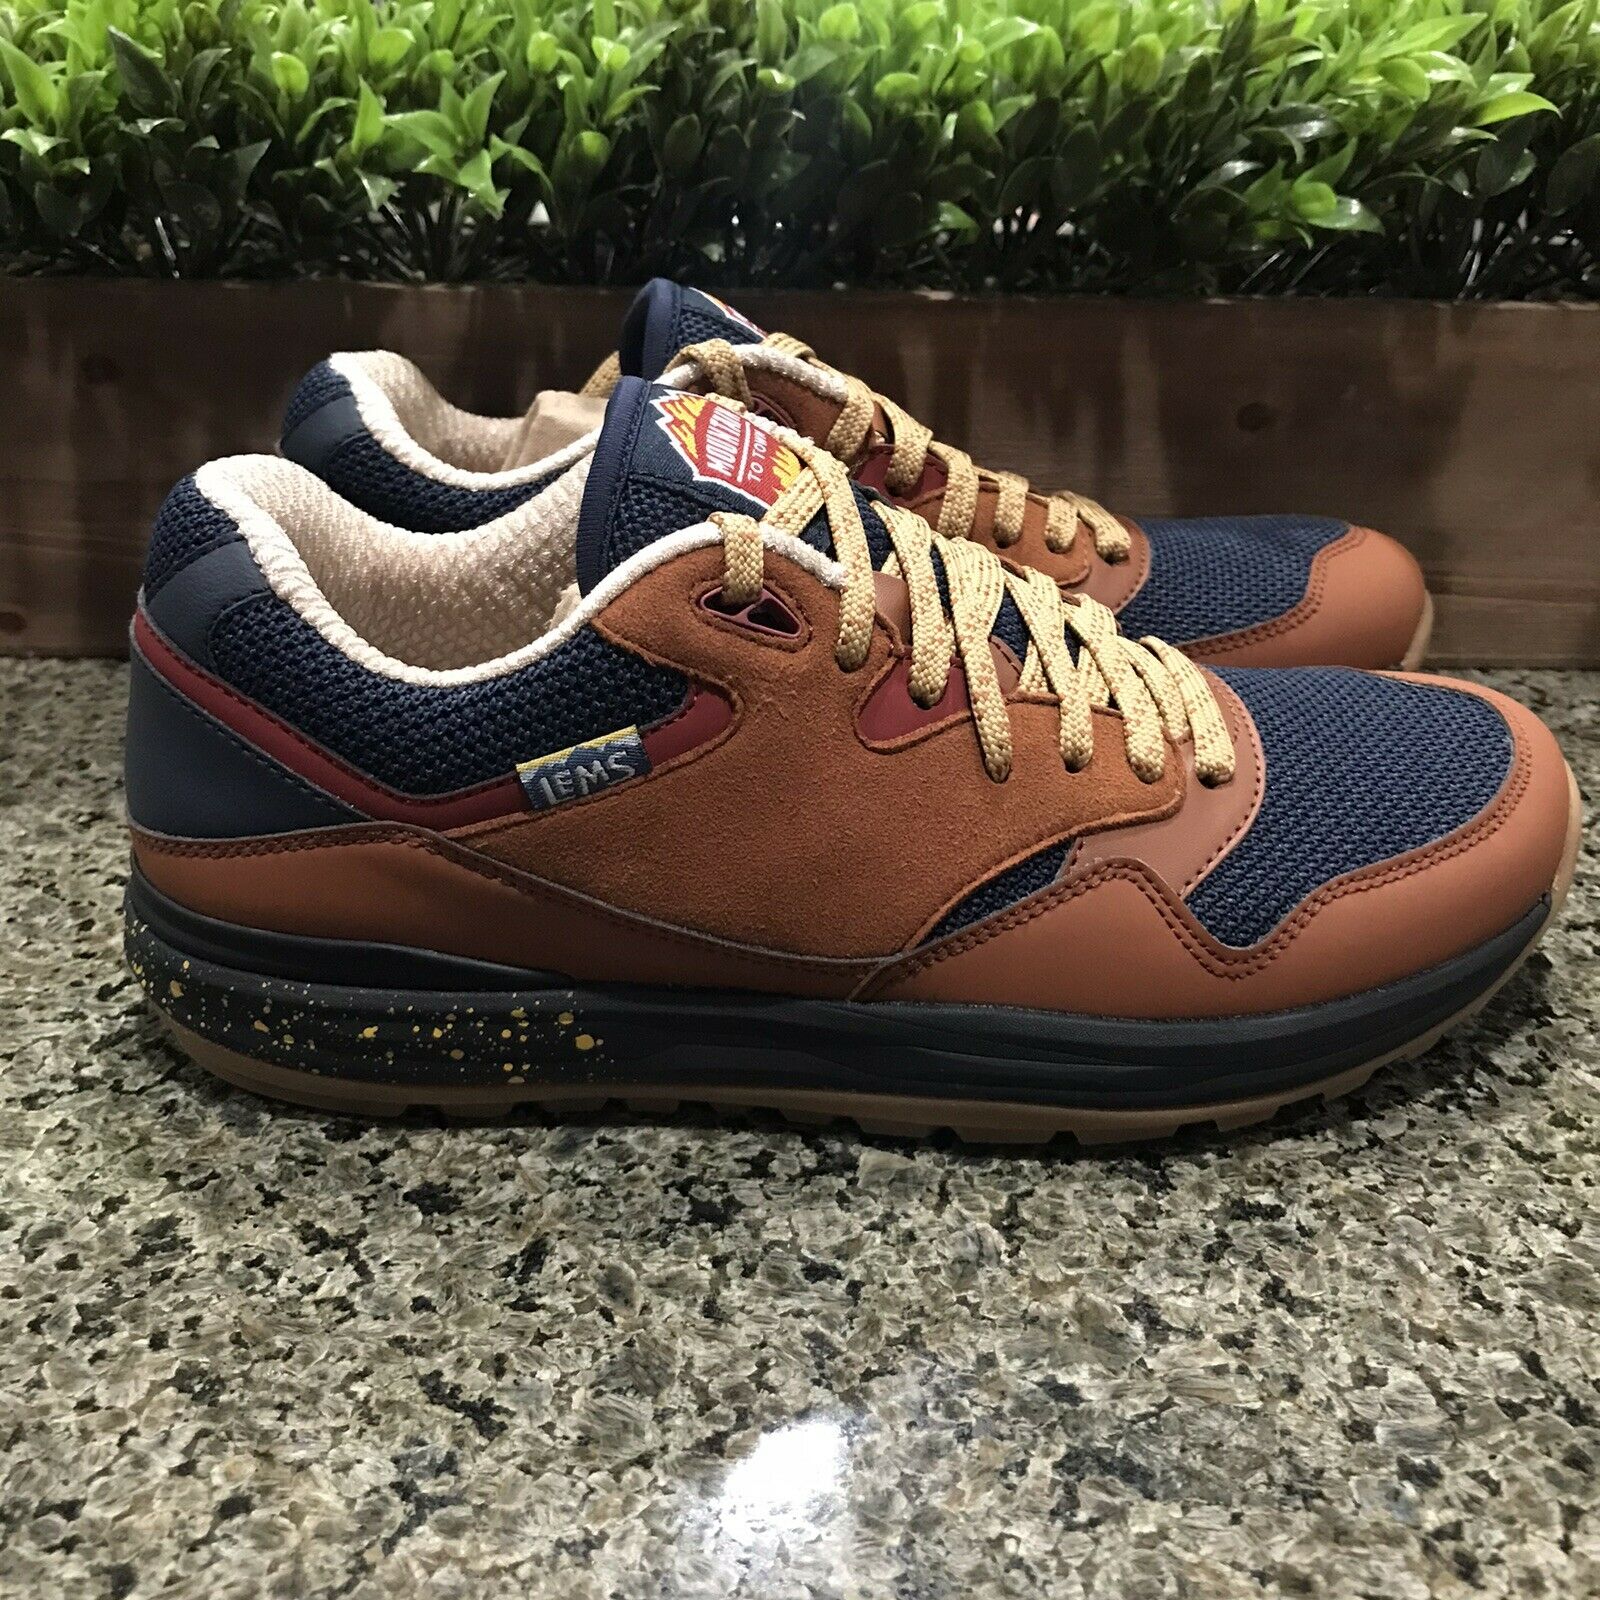 Lems Trailhead Sequoia Mountain Sneakers Hiking Shoes Men’s Size 7 D